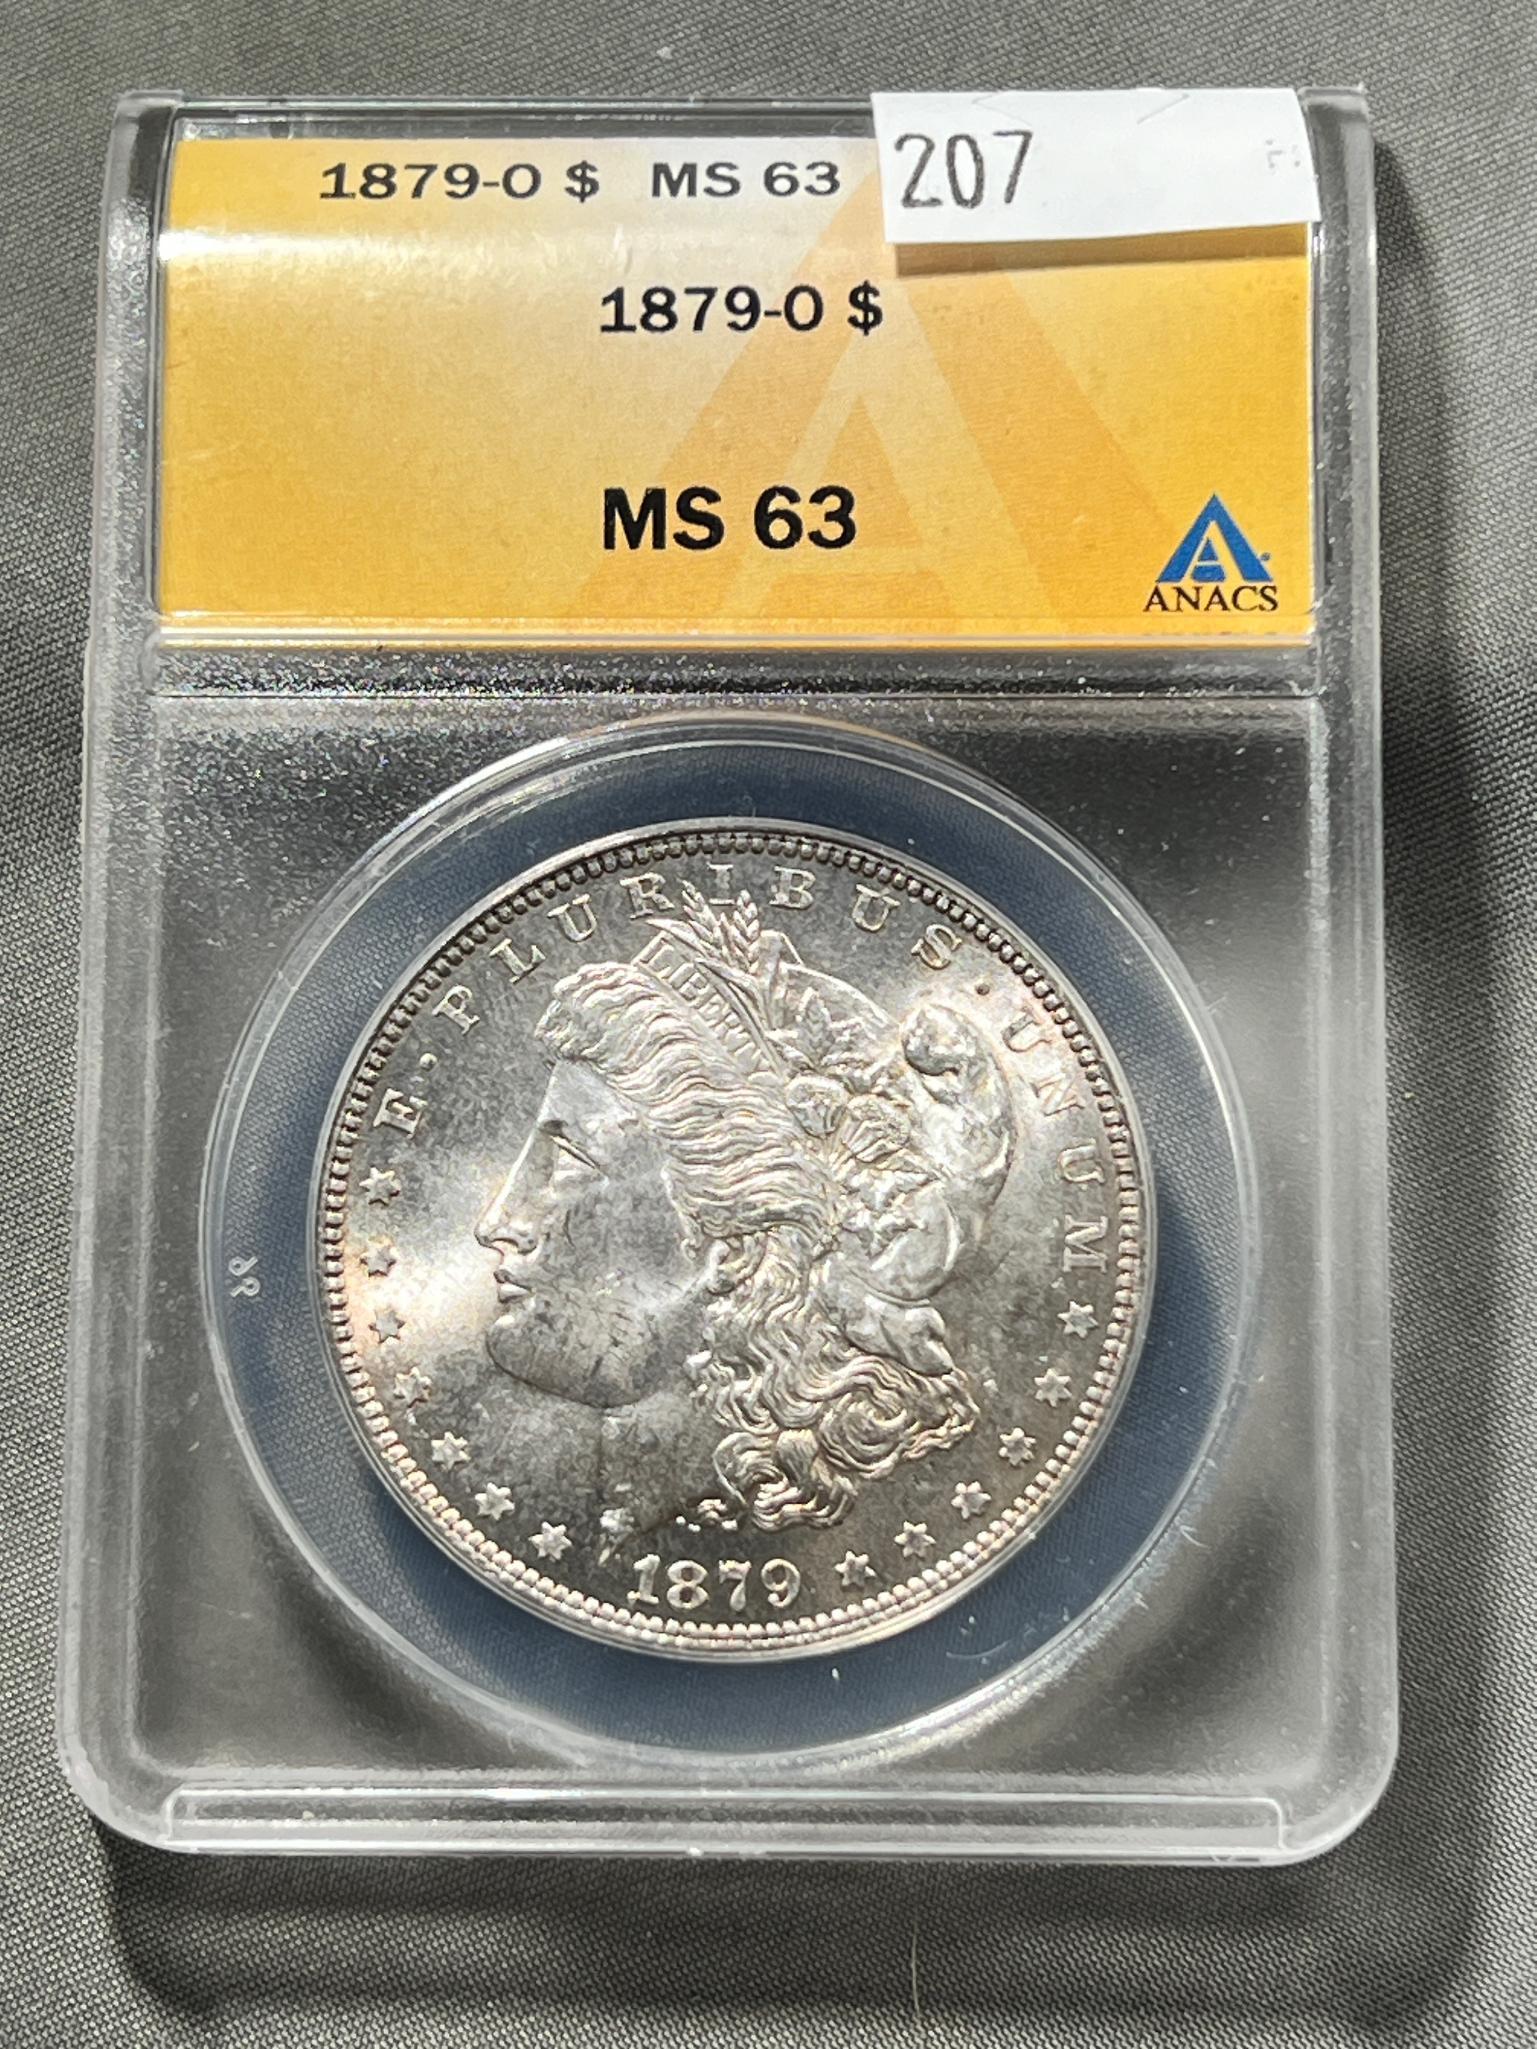 1879-O Morgan Silver Dollar on ANACS MS63 Holder